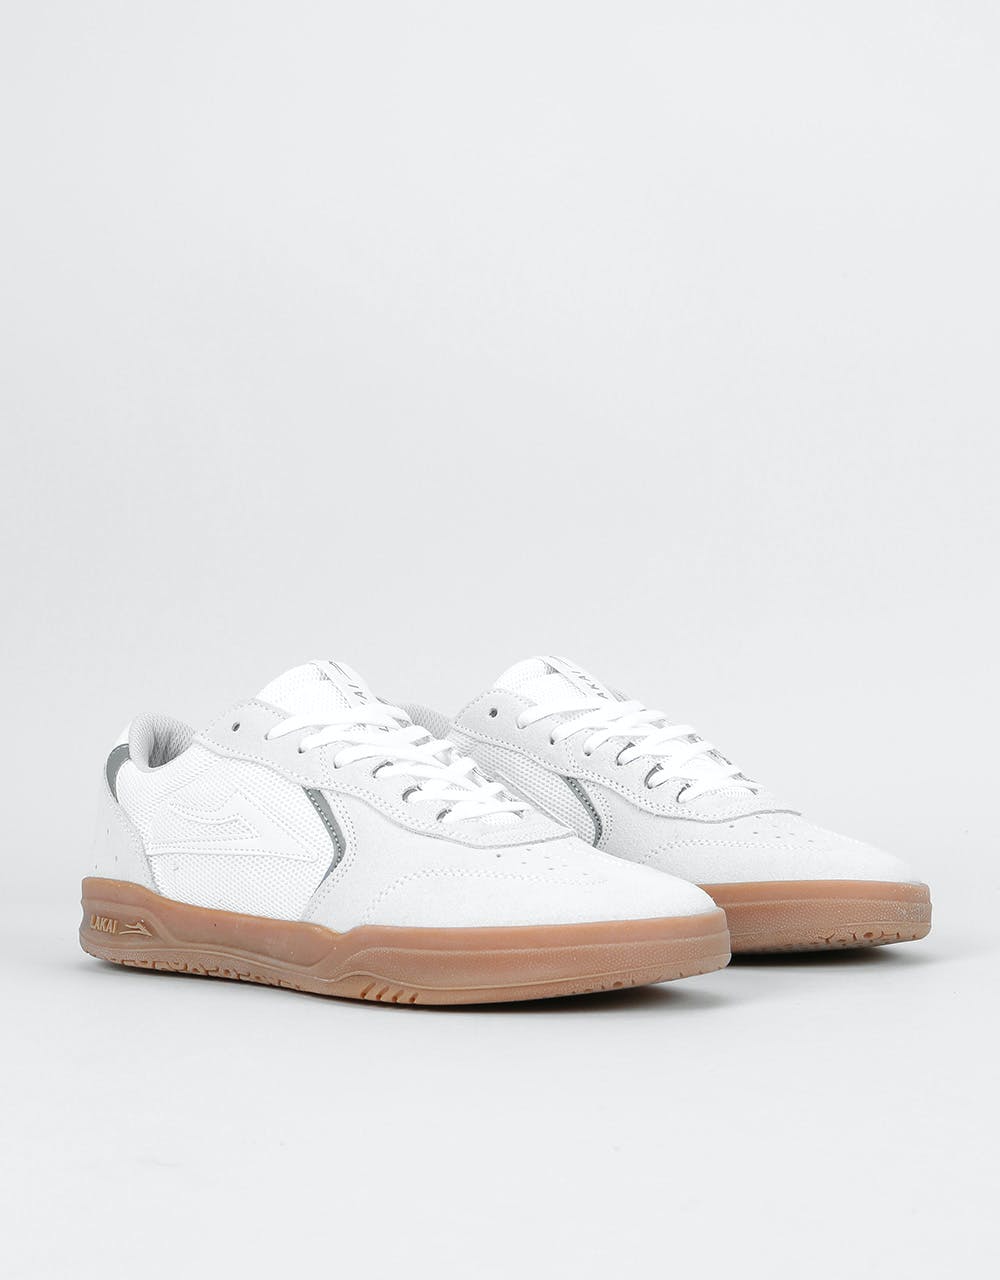 Lakai Atlantic Skate Shoes - White Suede